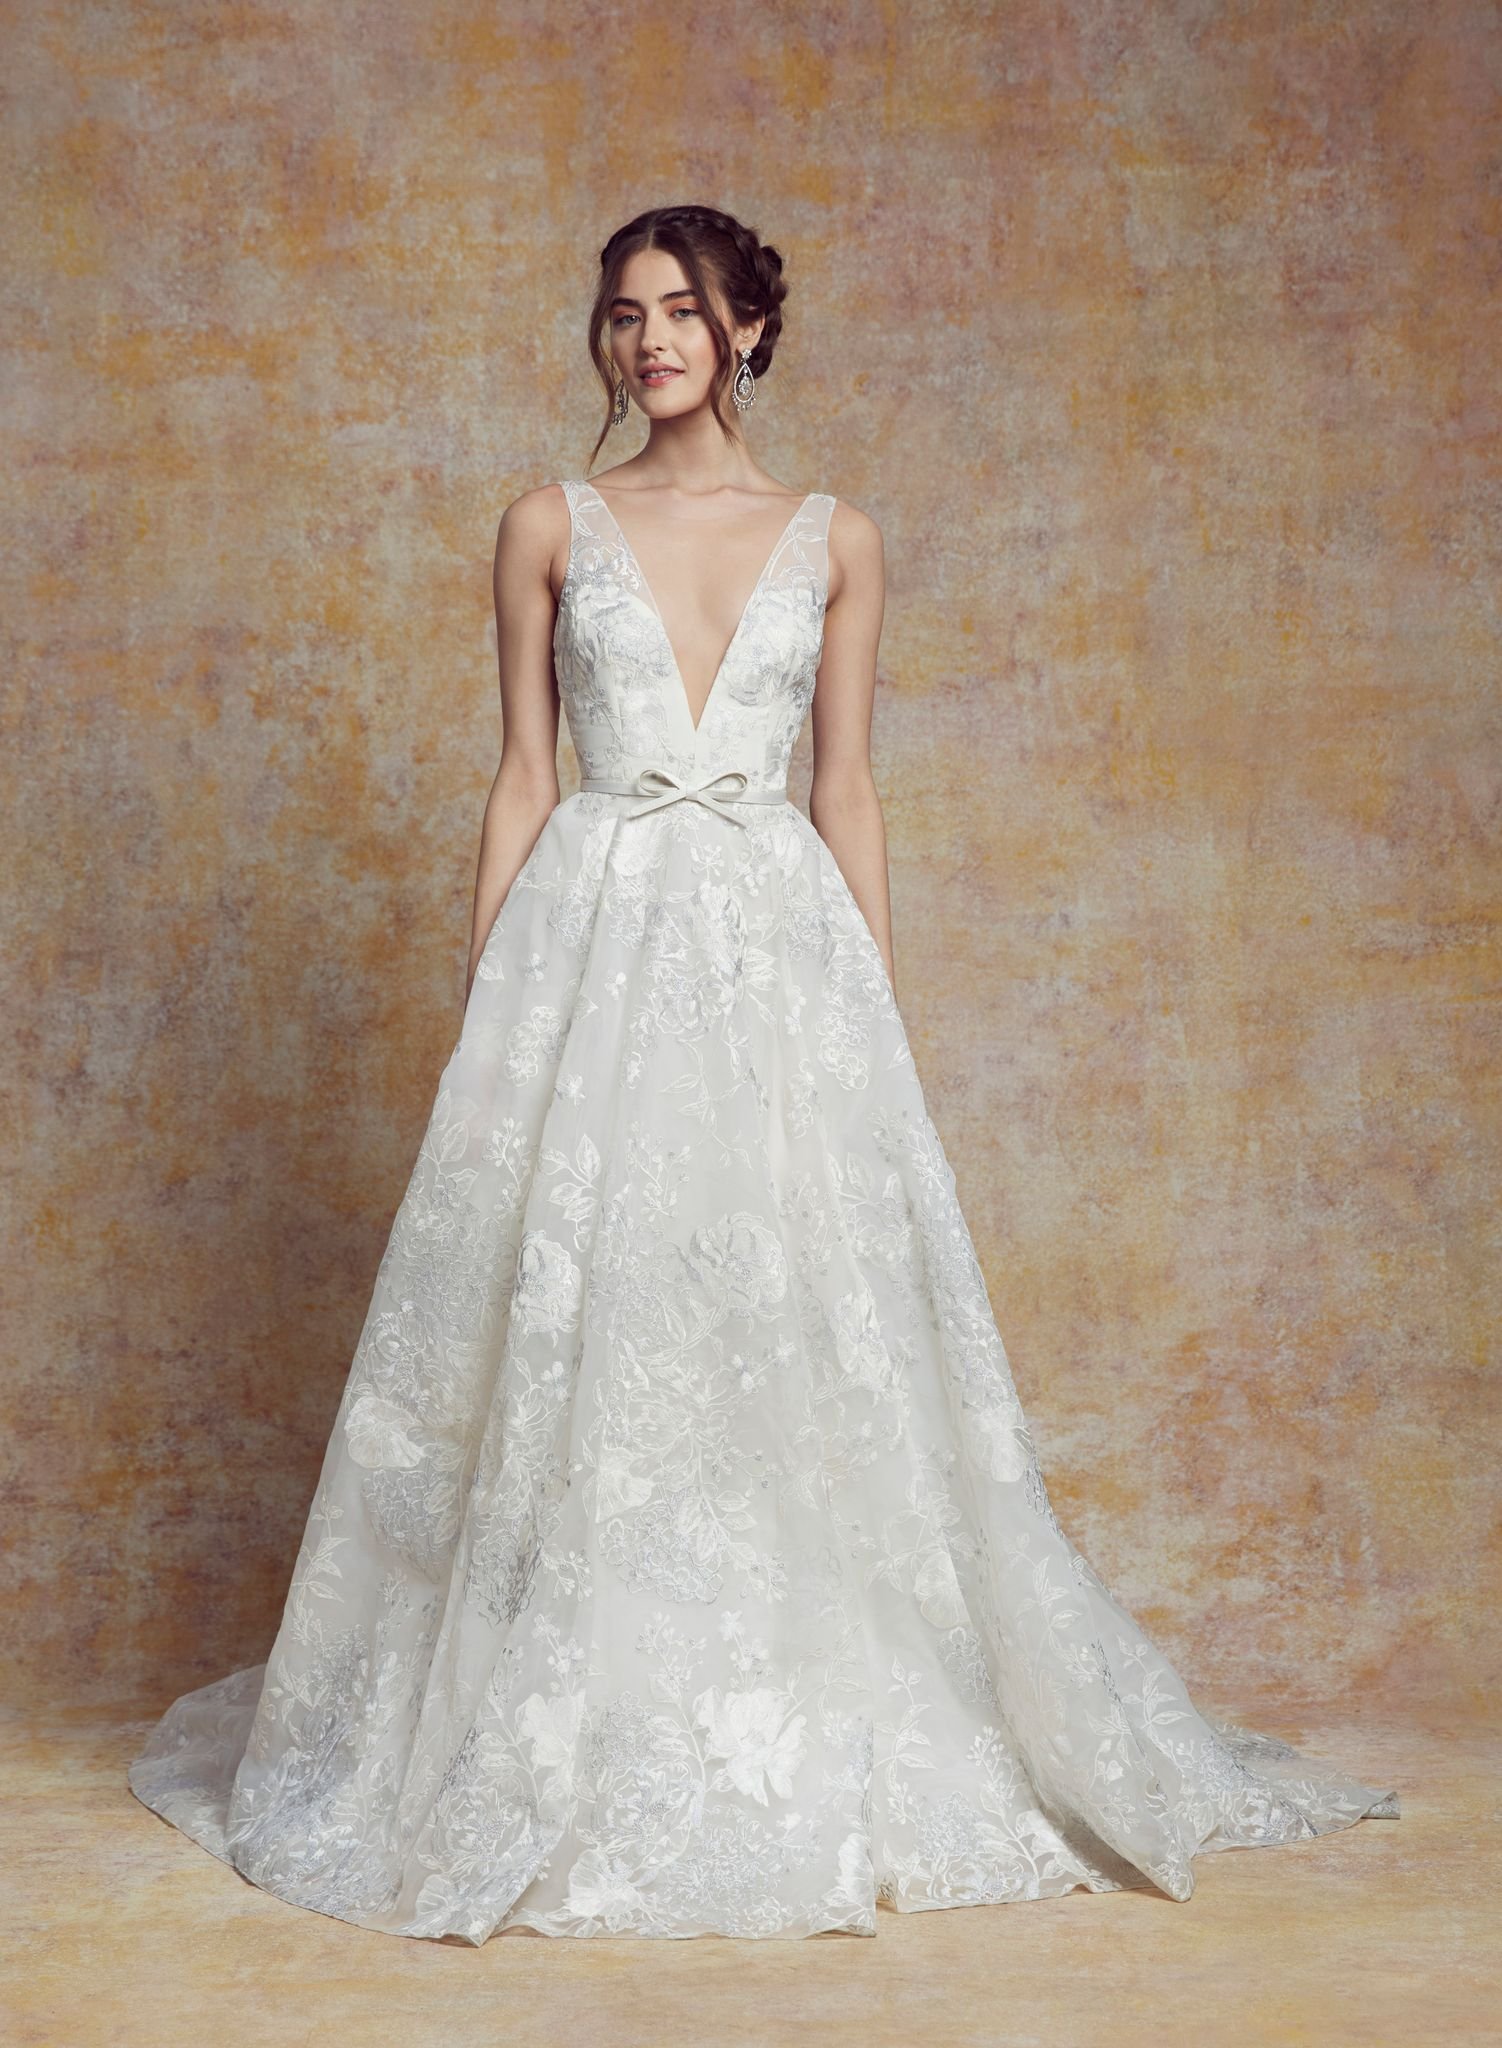 blanc-de-blanc-bridal-boutique-cleveland-dress-wedding-gown-Lana.jpeg